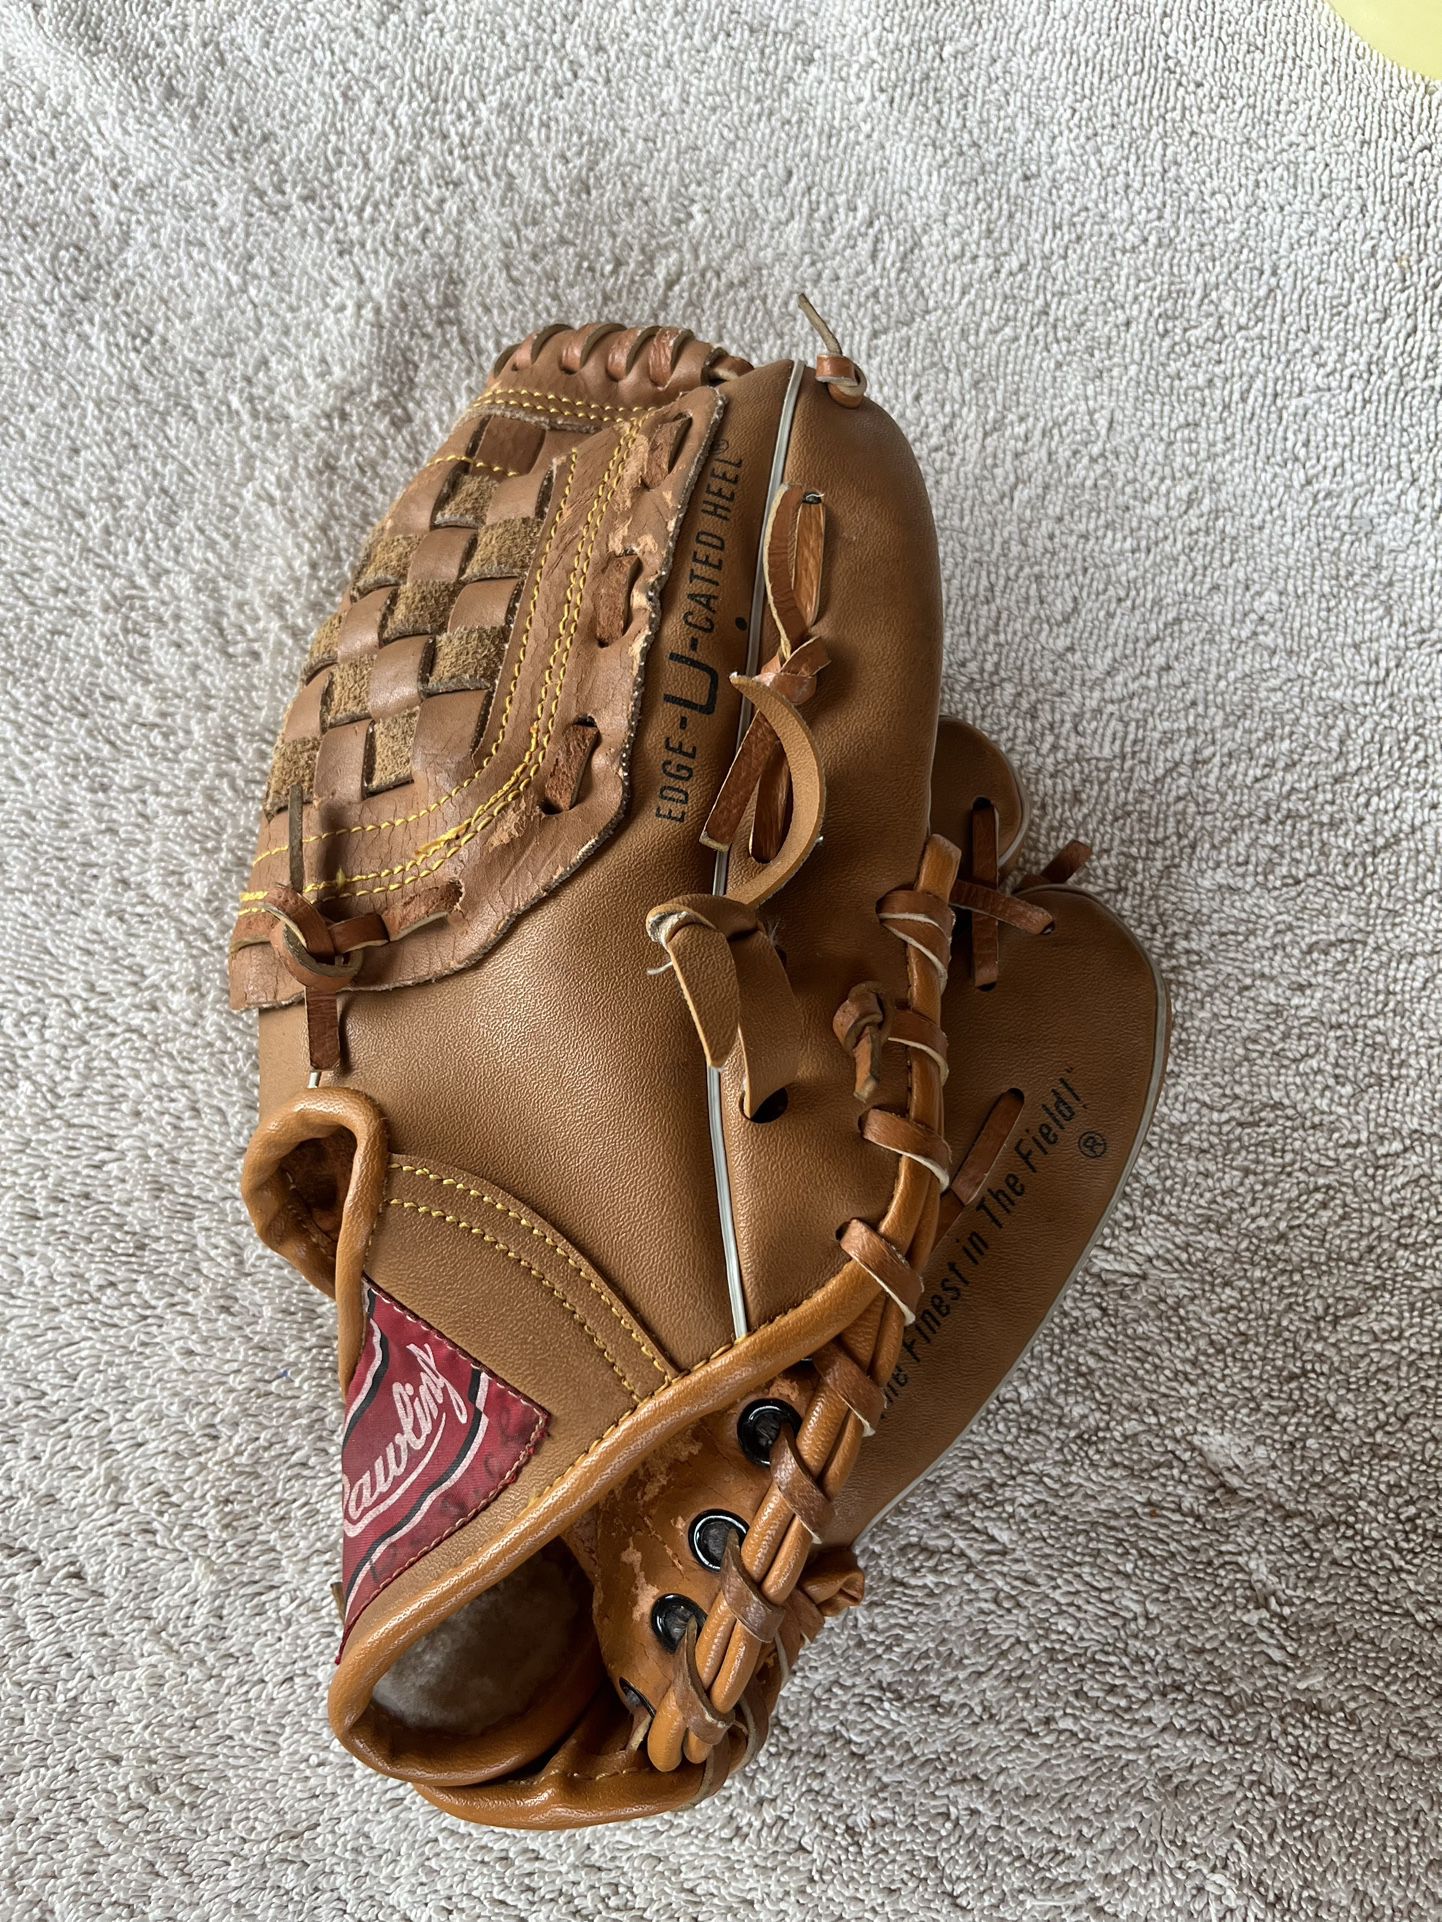 Rawlings Baseball/ Tee Ball Glove 